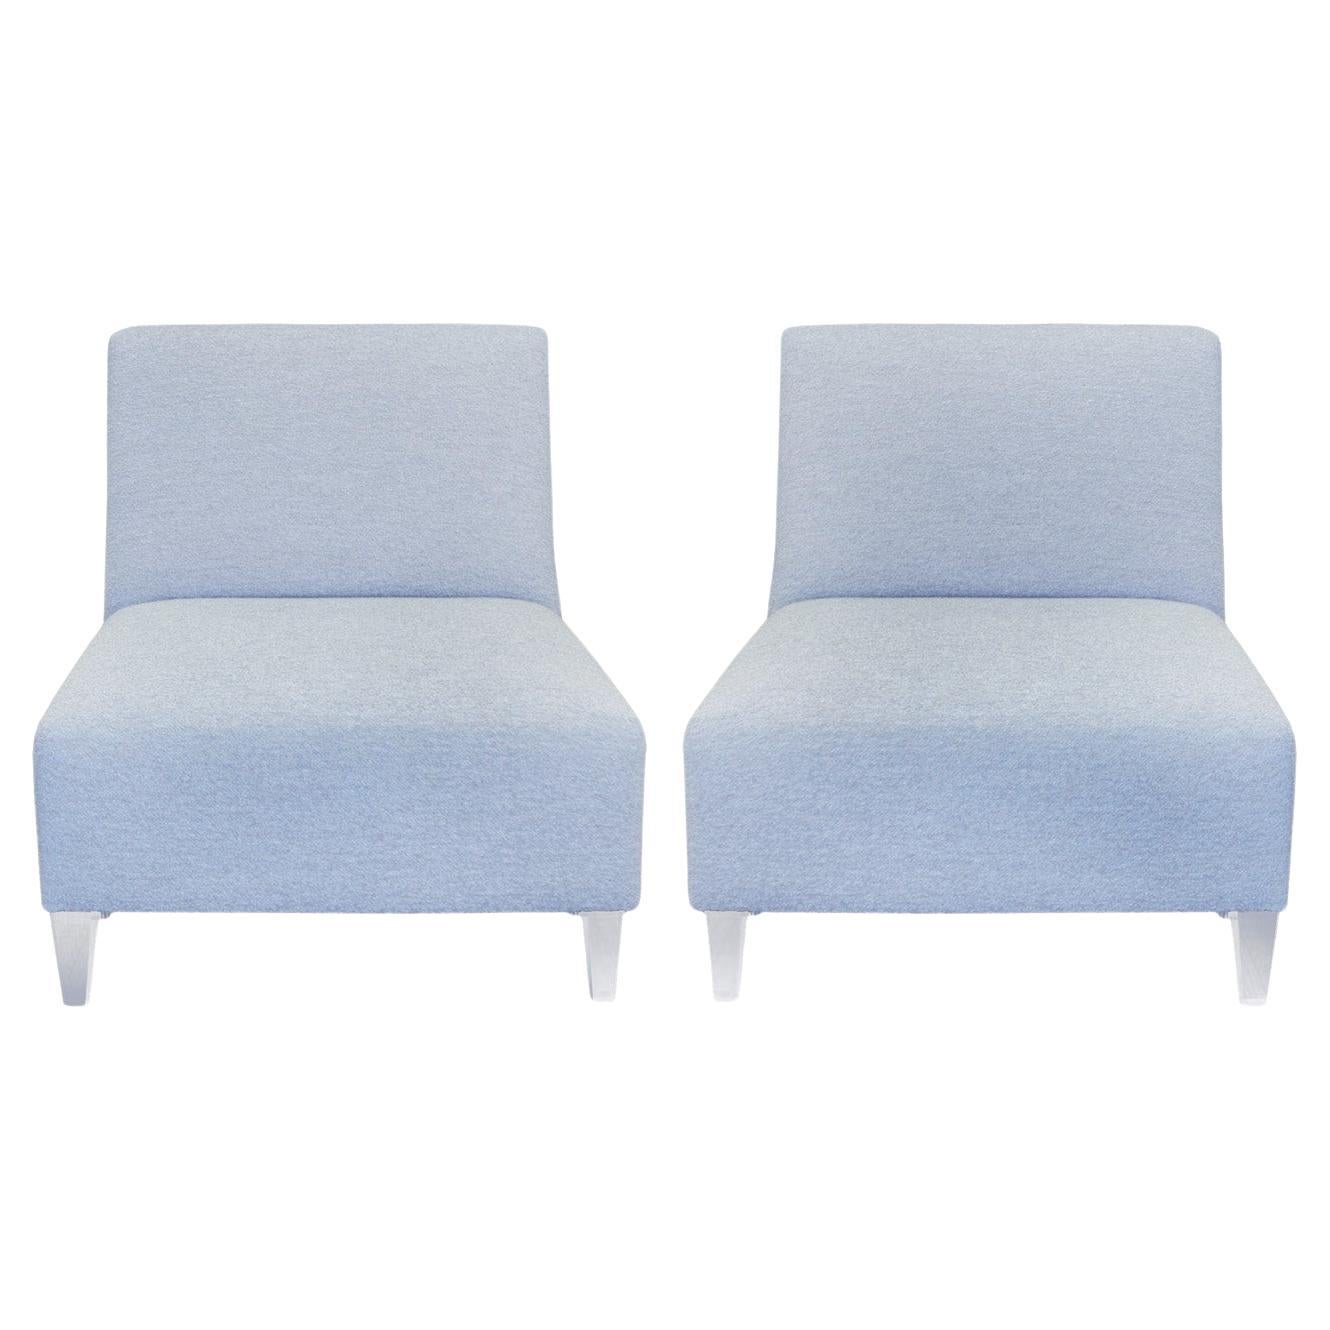 Elegant Pair of Slipper Chairs with Lucite Legs